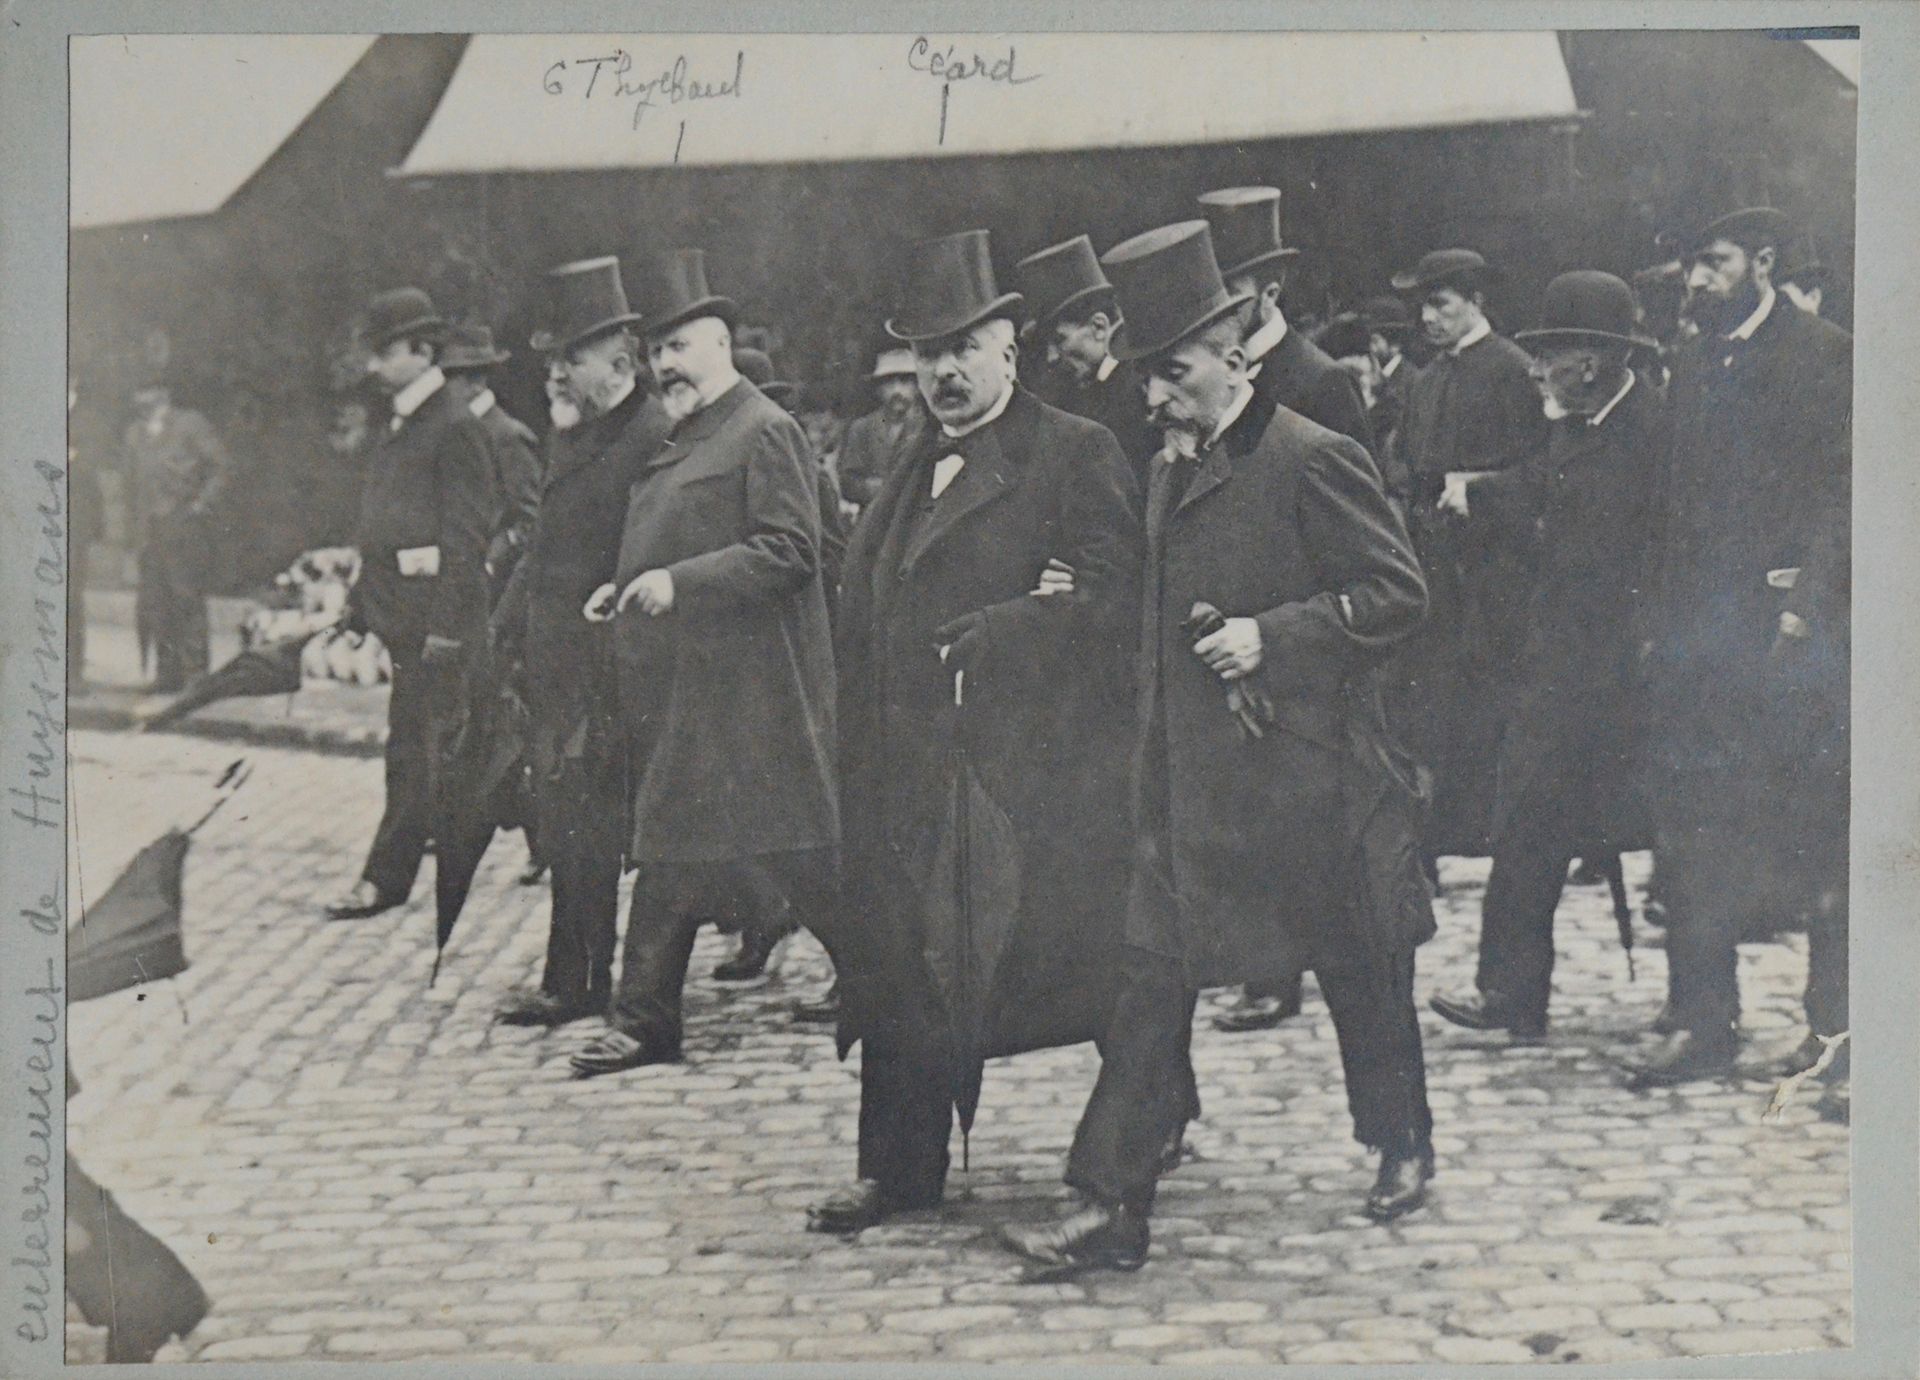 [HUYSMANS, Joris-Karl]. Huysmans的葬礼。原始时期的照片。1907年5月15日，巴黎。
见第8页插图
非常罕见的照片，拍摄于Jor&hellip;